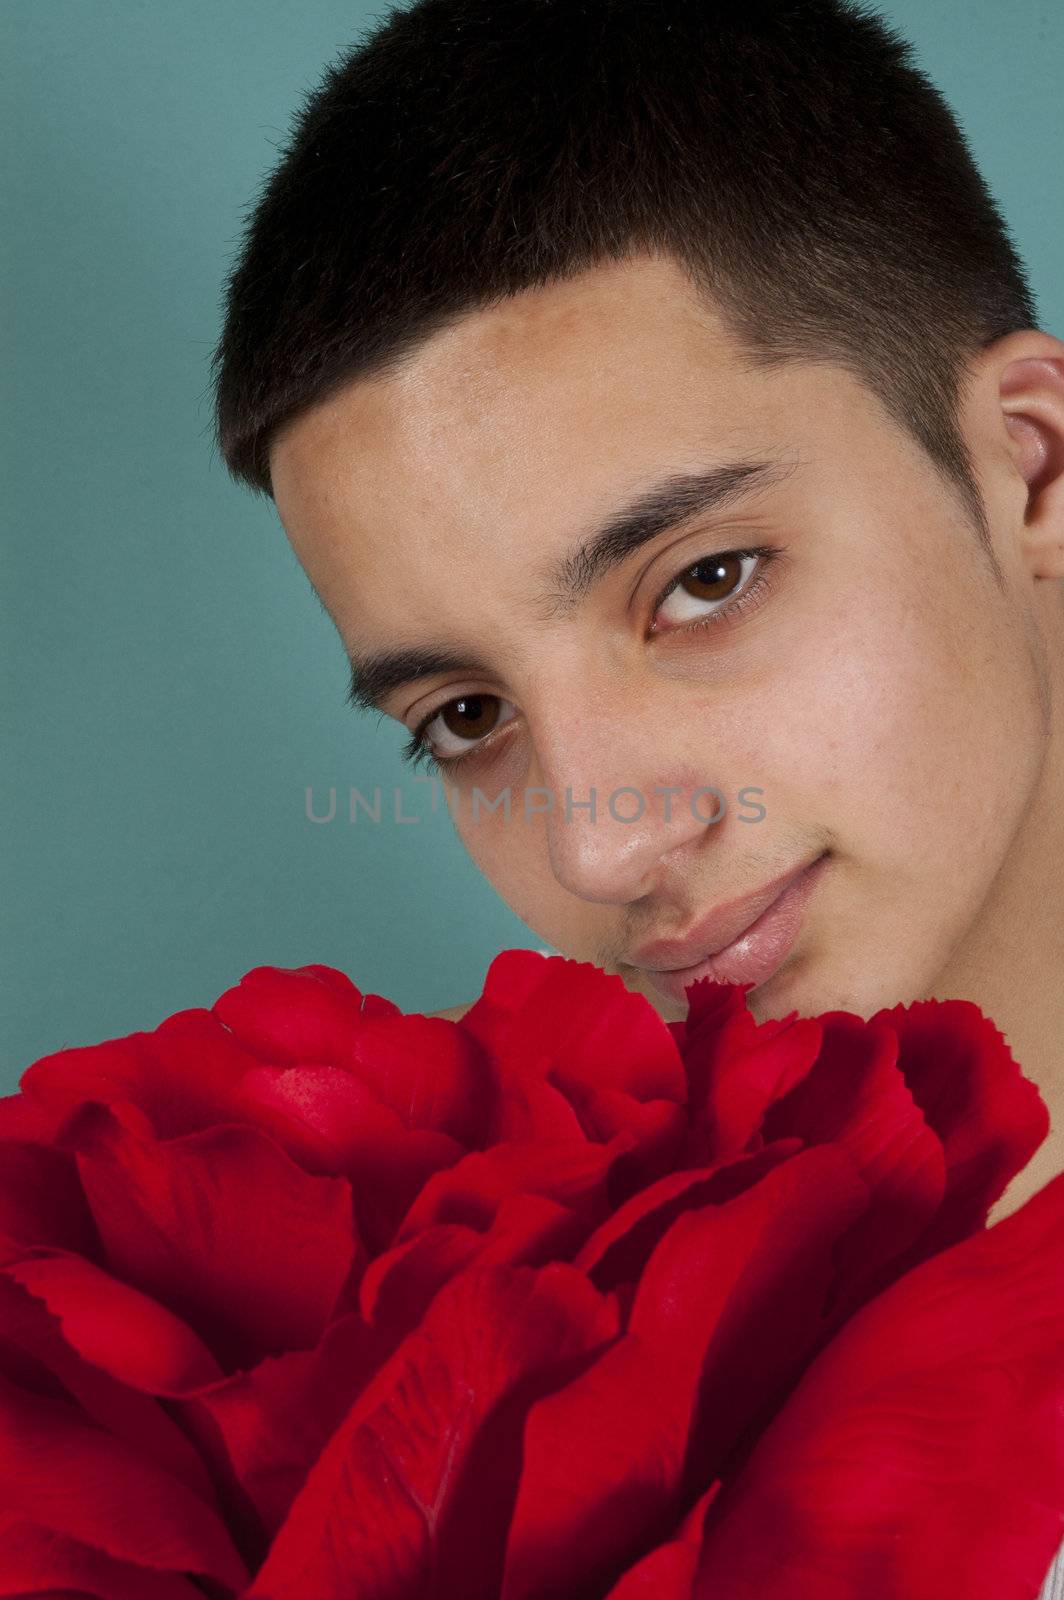 teenage pakistani boy holding a big red rose;